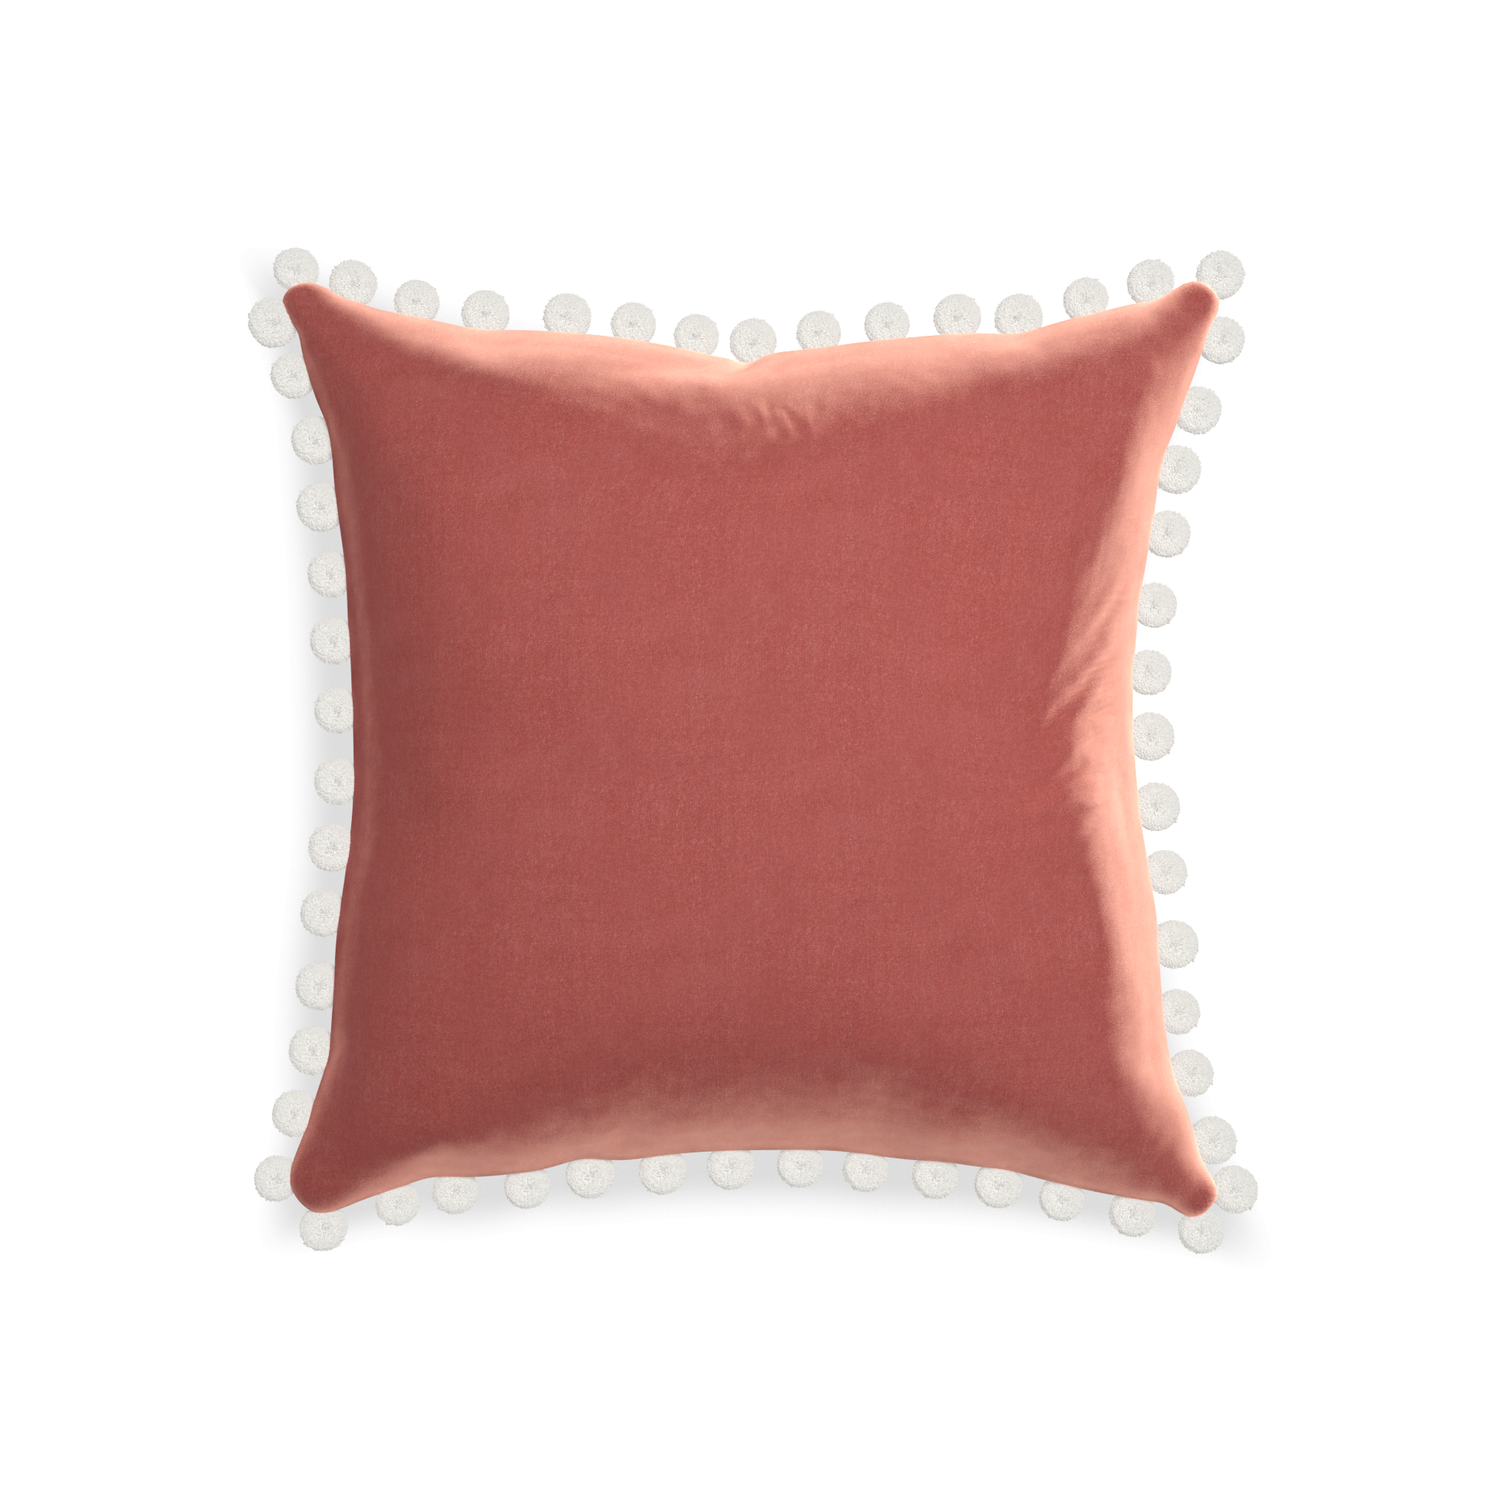 20-square cosmo velvet custom pillow with snow pom pom on white background